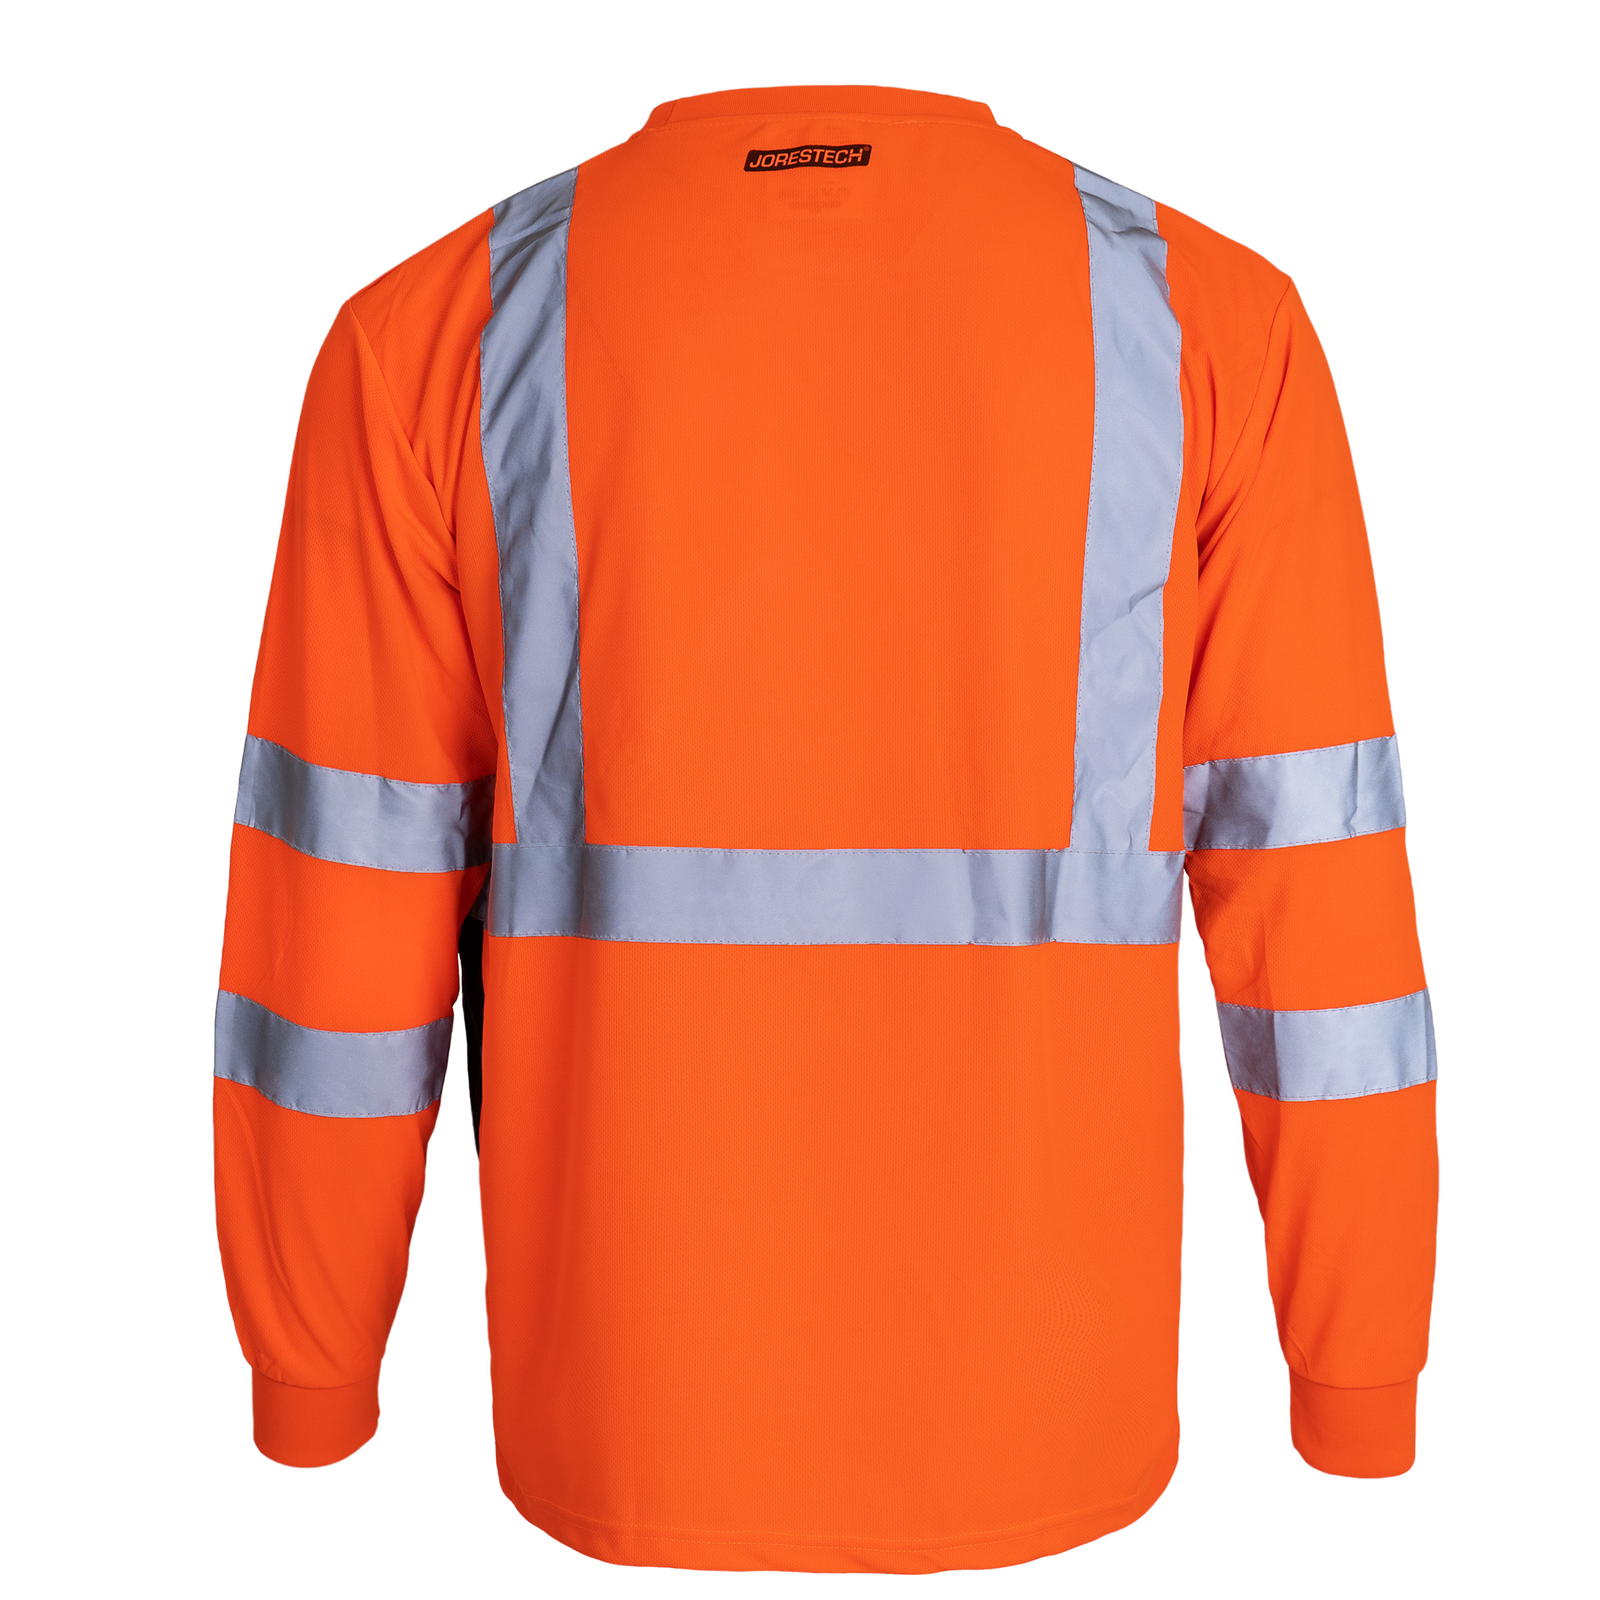 Back view of the orange black hi-vis reflective JORESTECH safety long sleeve shirt 